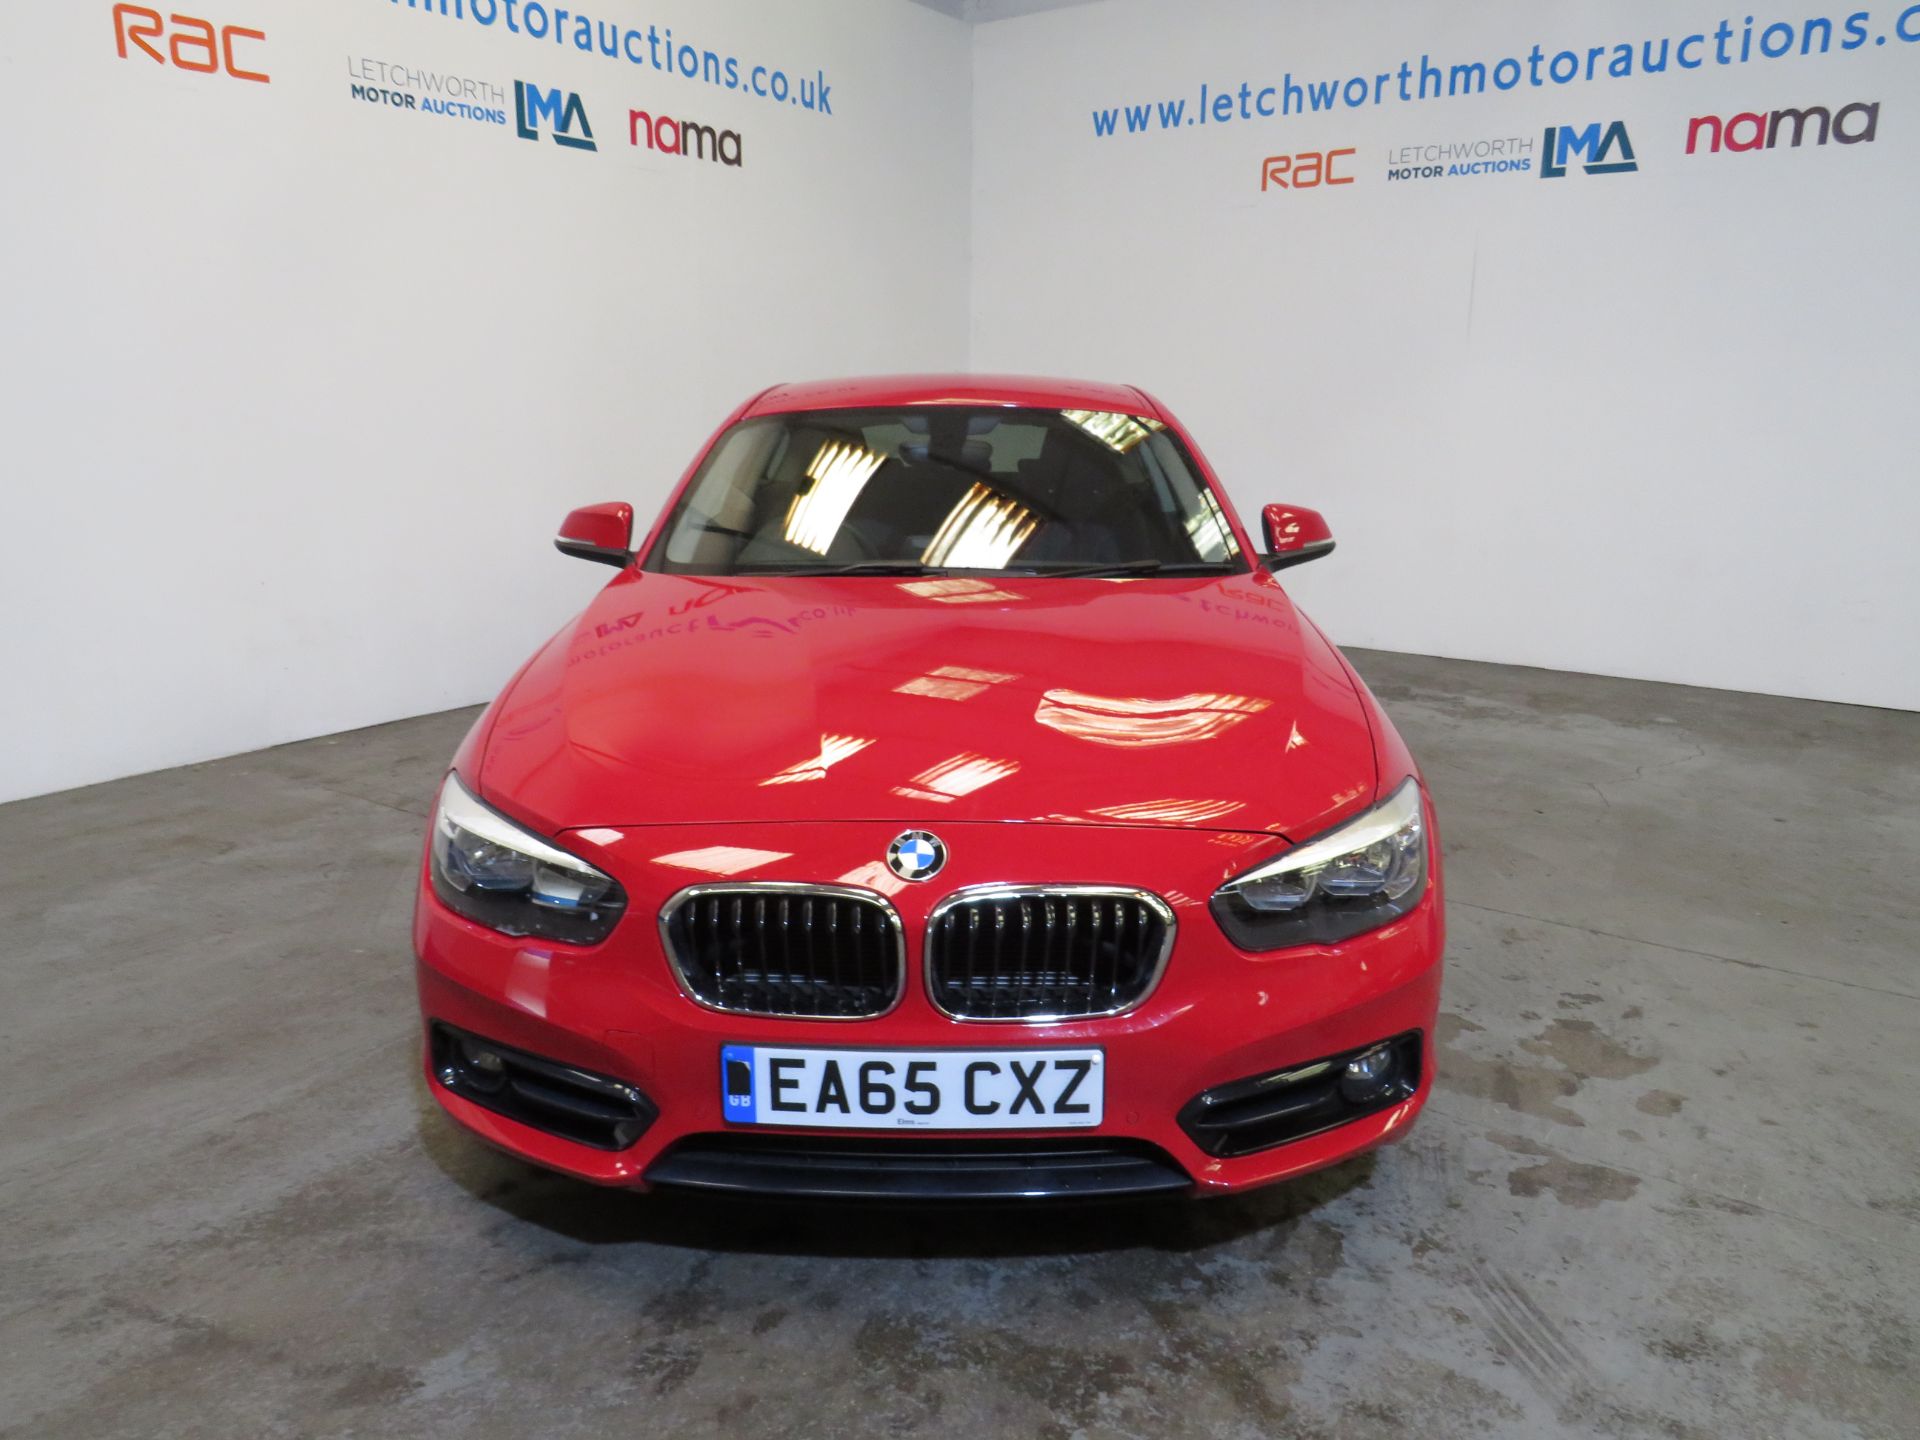 2015 BMW 118i Sport - 1499cc - Image 2 of 9